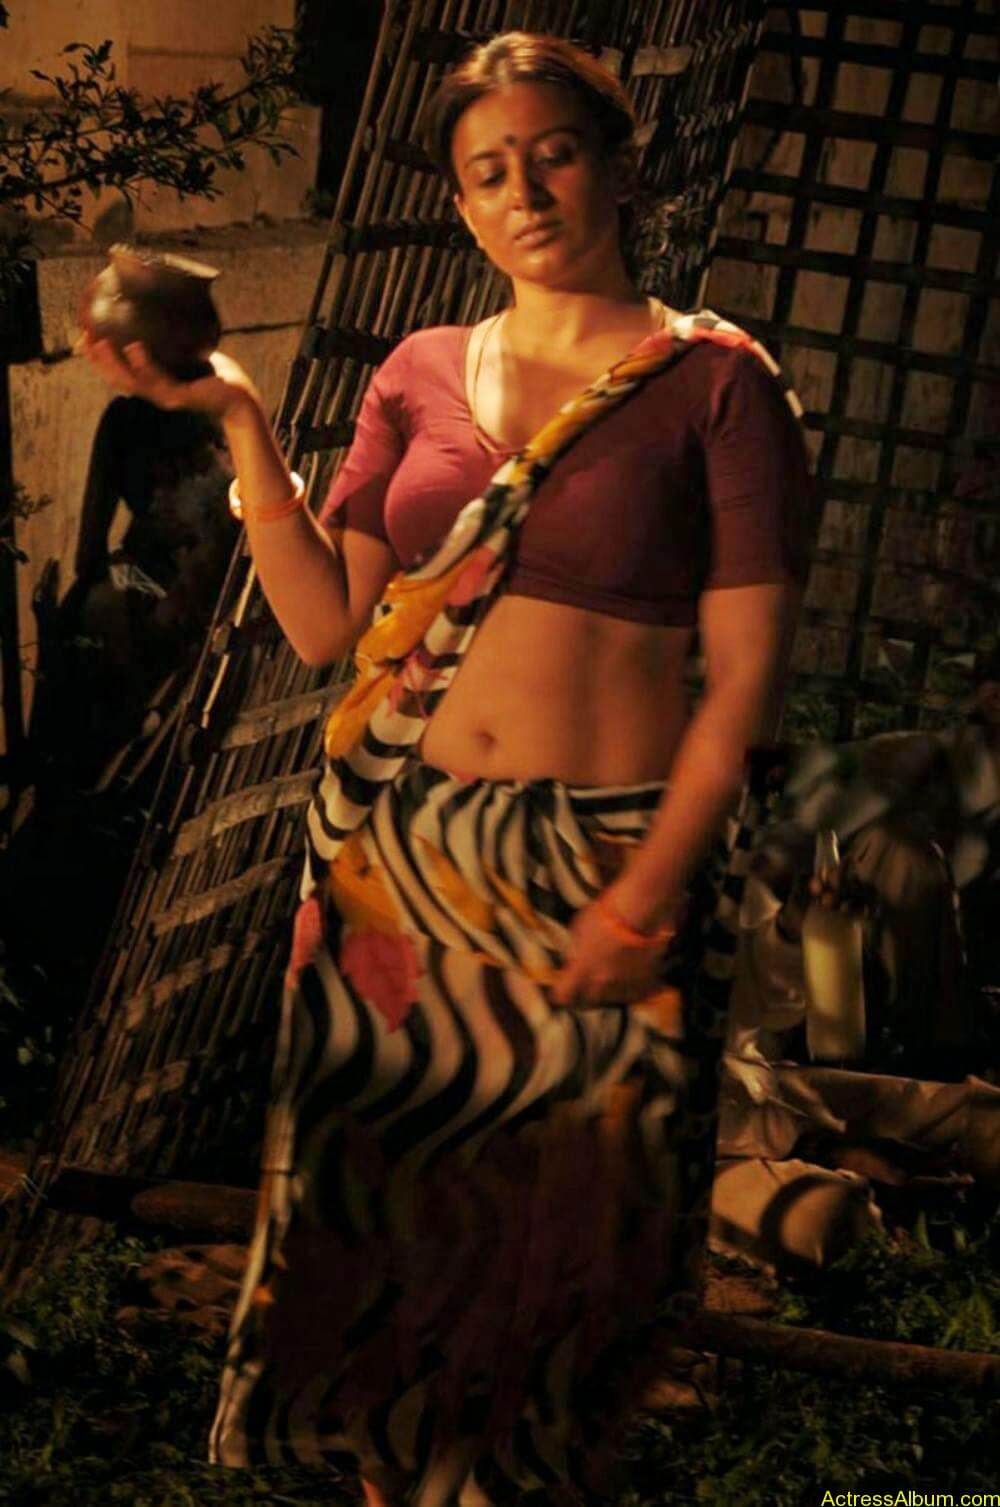 Pooja Gandhi Hot Stills from DANDUPALYA MOVIE HOT PHOTOS - Actress Album